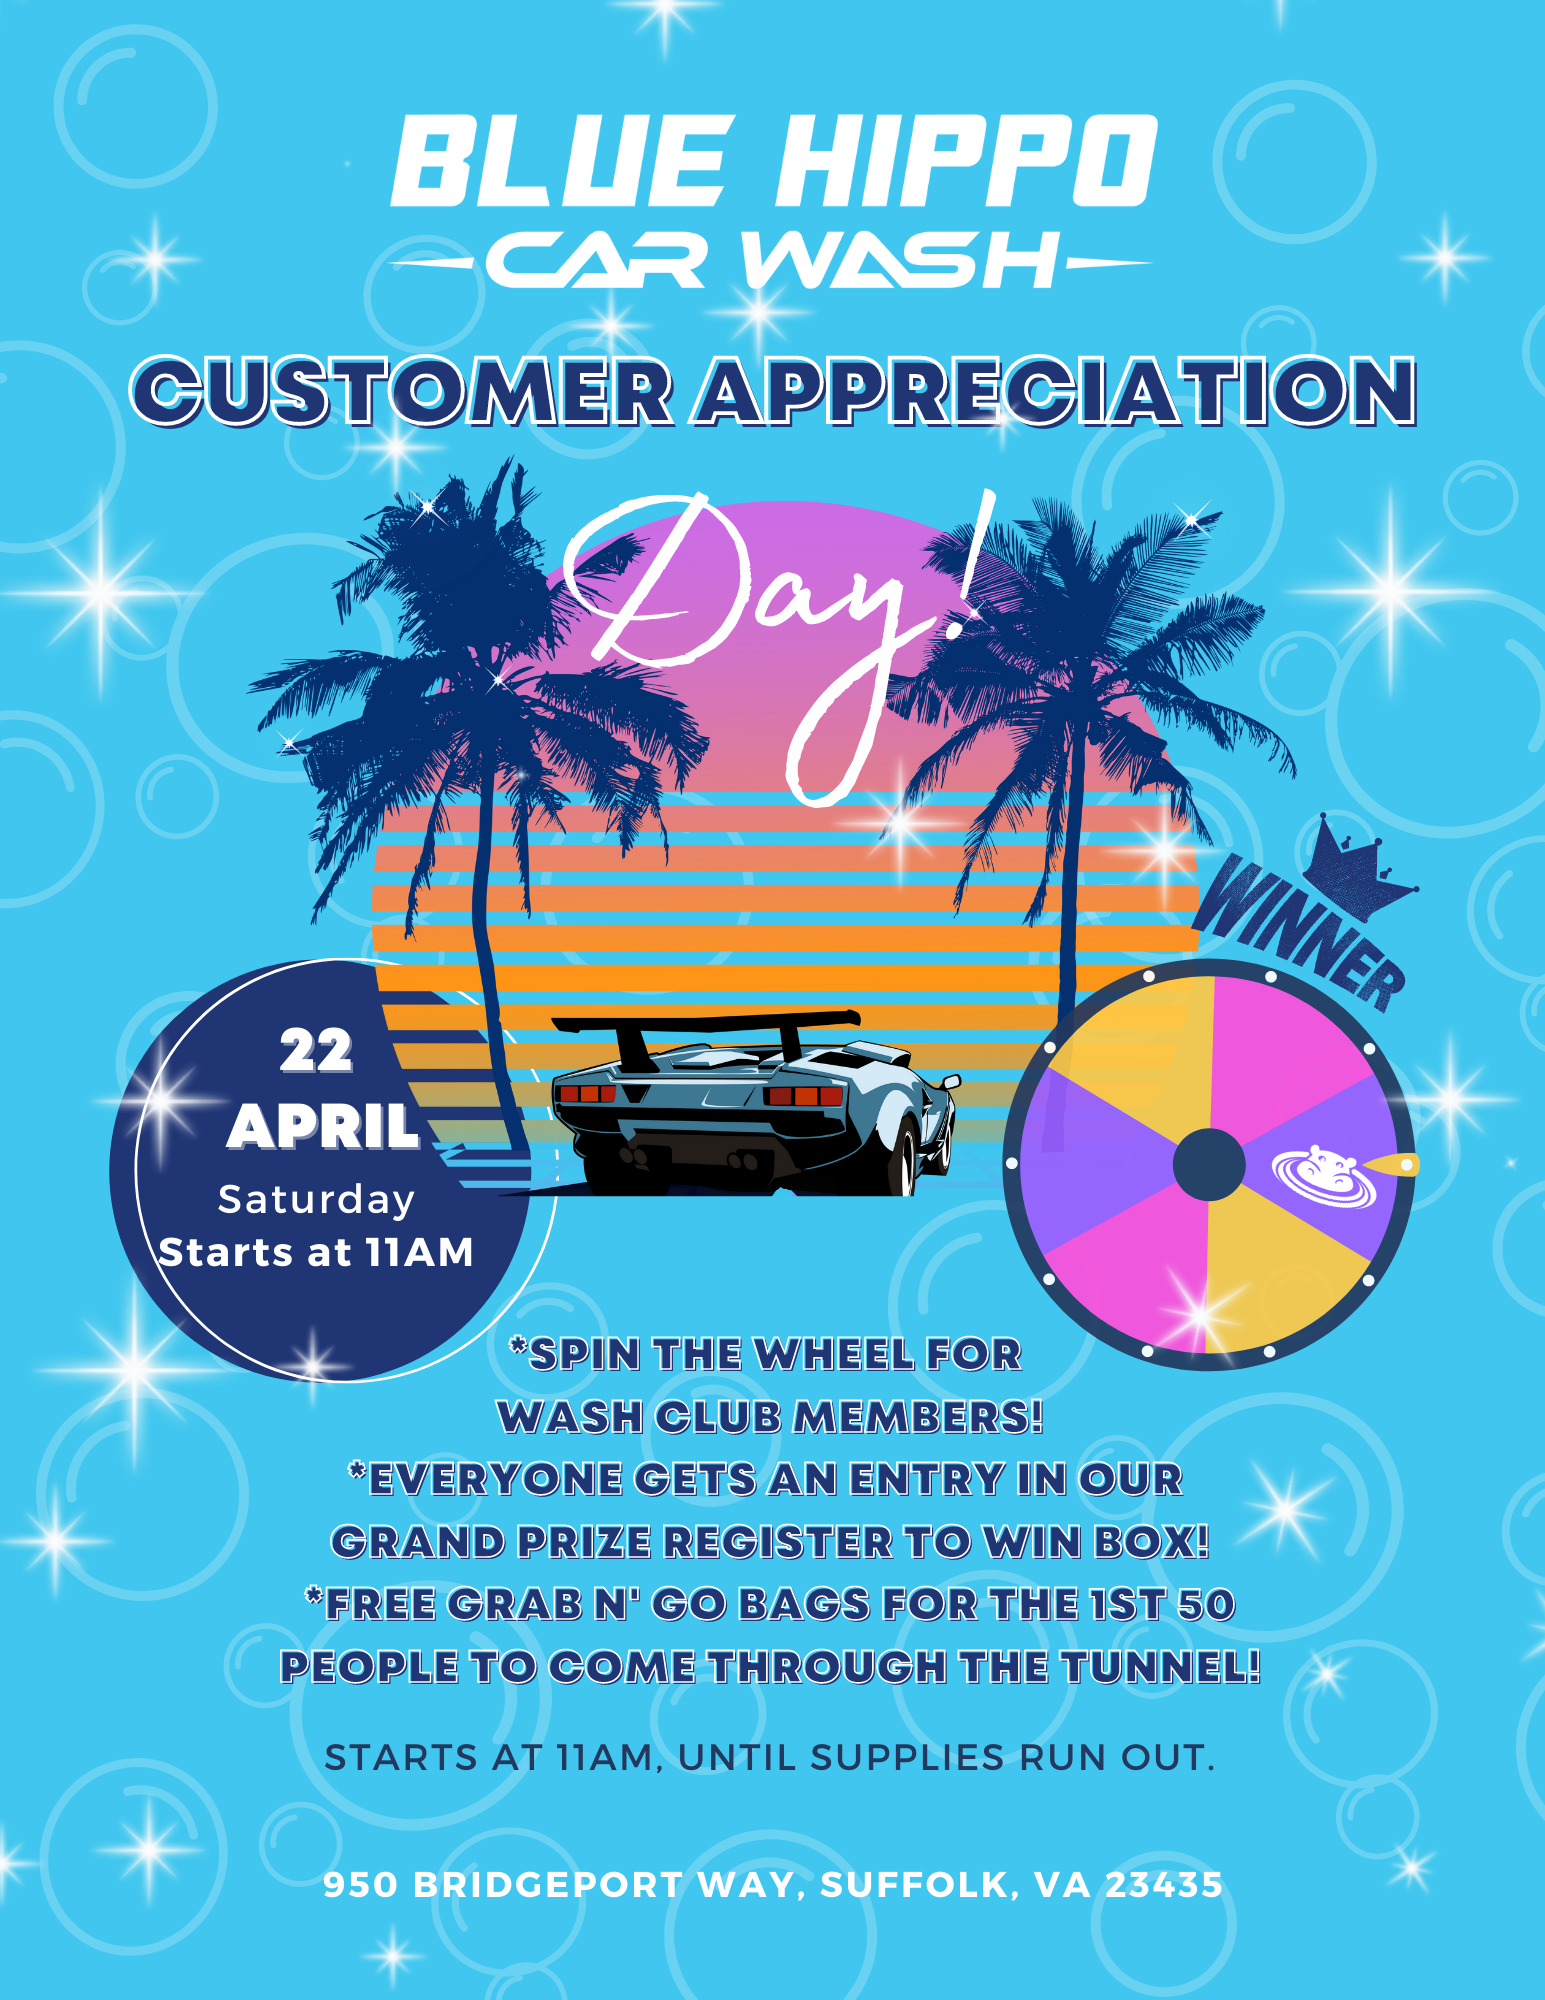 Customer Appreciation Day at Blue Hippo